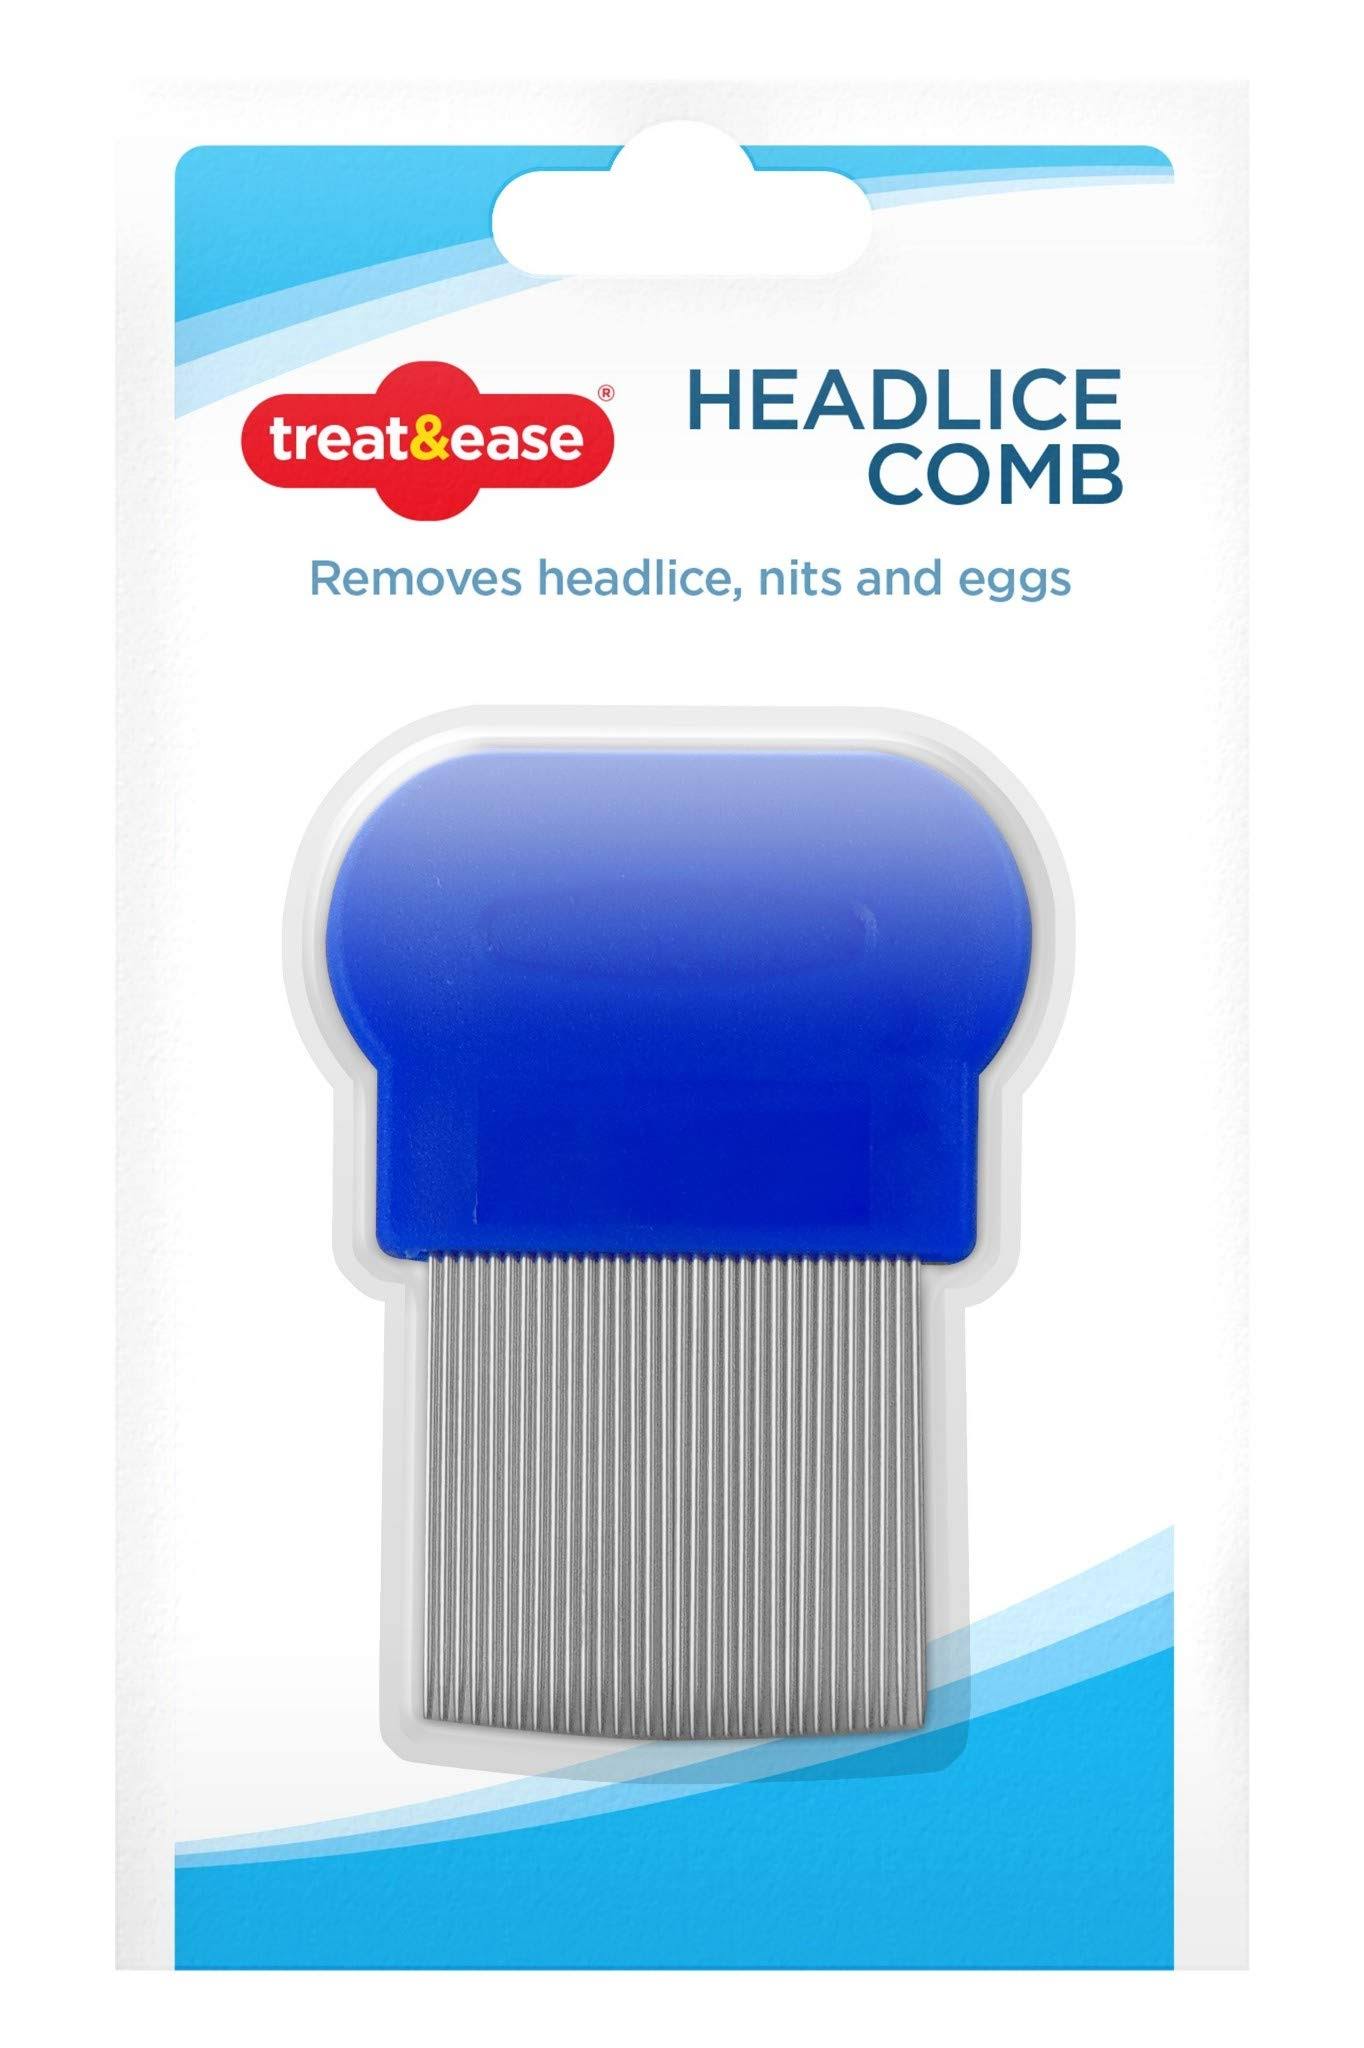 Treat & Ease Head Lice Comb